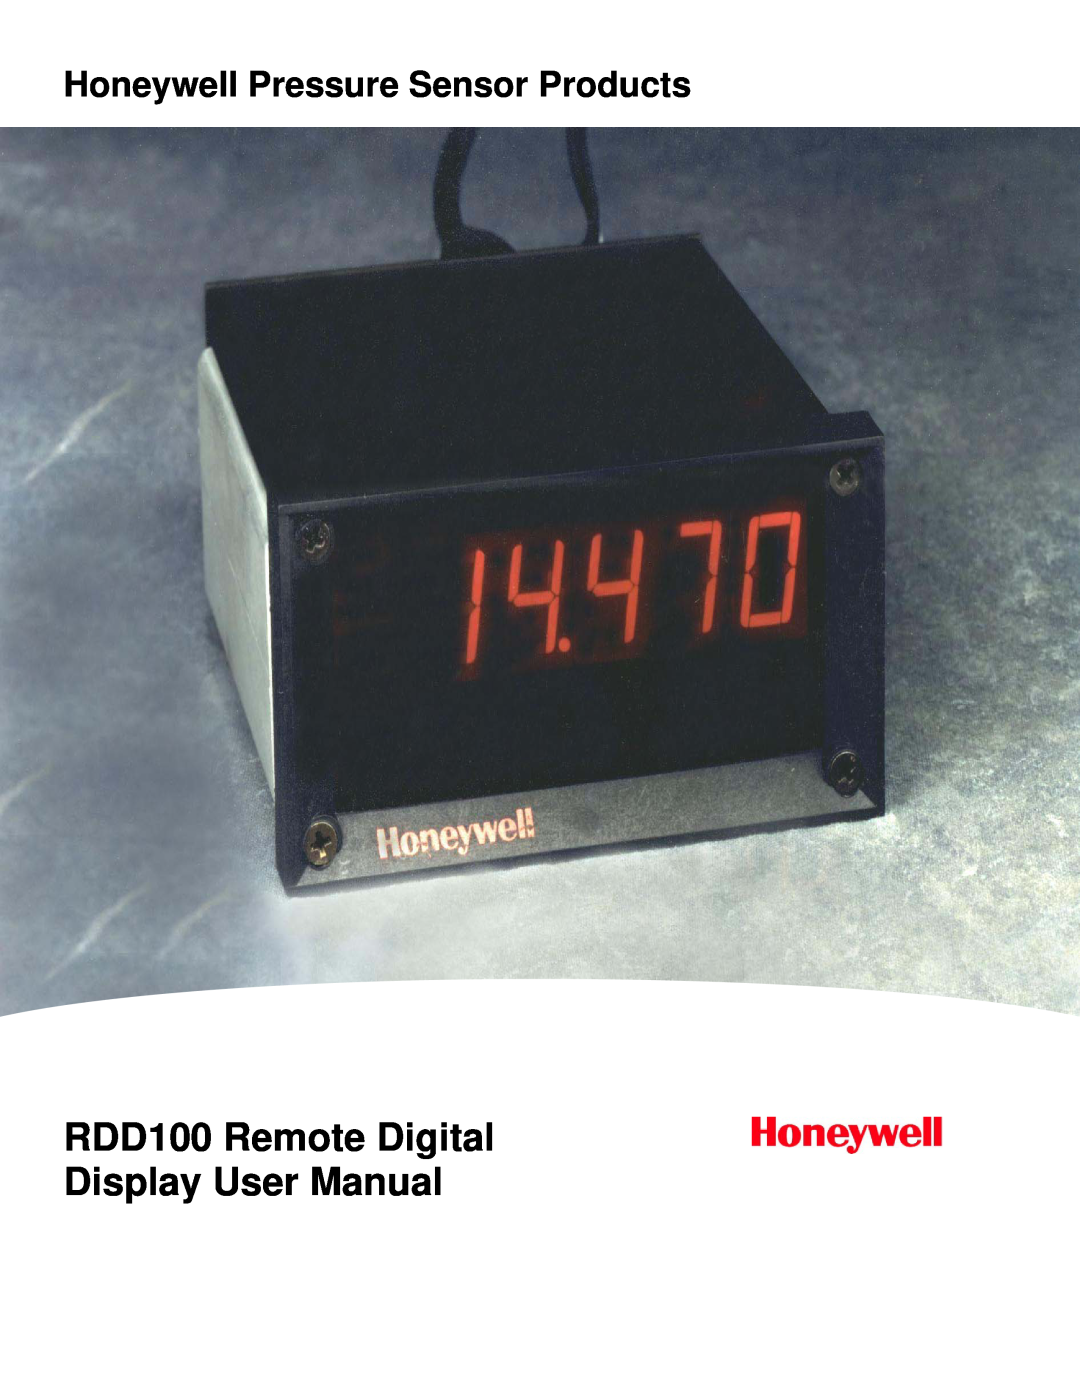 Honeywell user manual RDD100 Remote Digital Display User Manual, Honeywell Pressure Sensor Products 